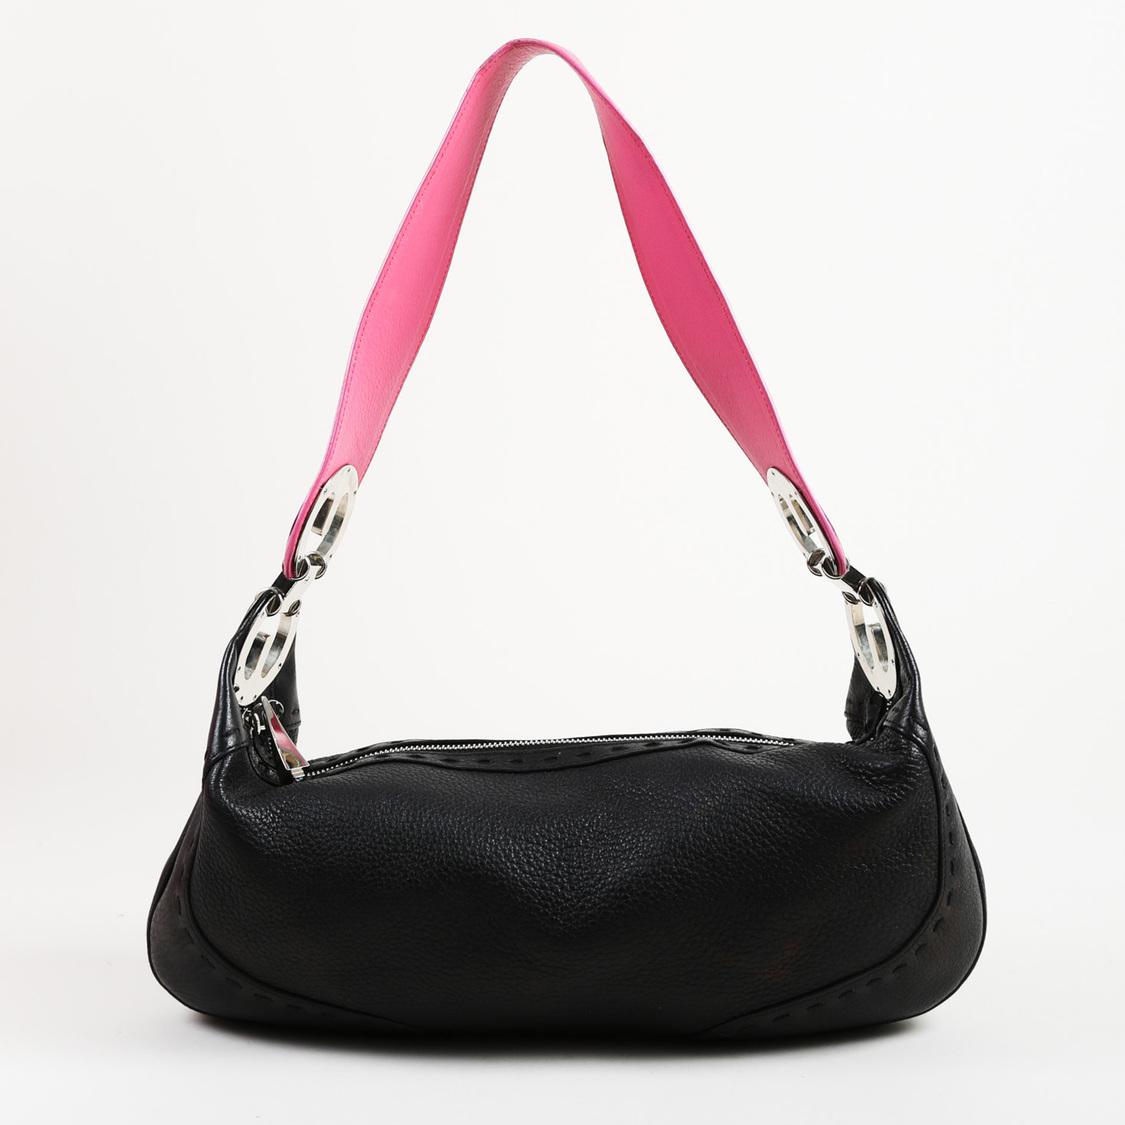 ESCADA Black & Pink Grained Leather Interchangeable Strap Shoulder Bag - Lyst